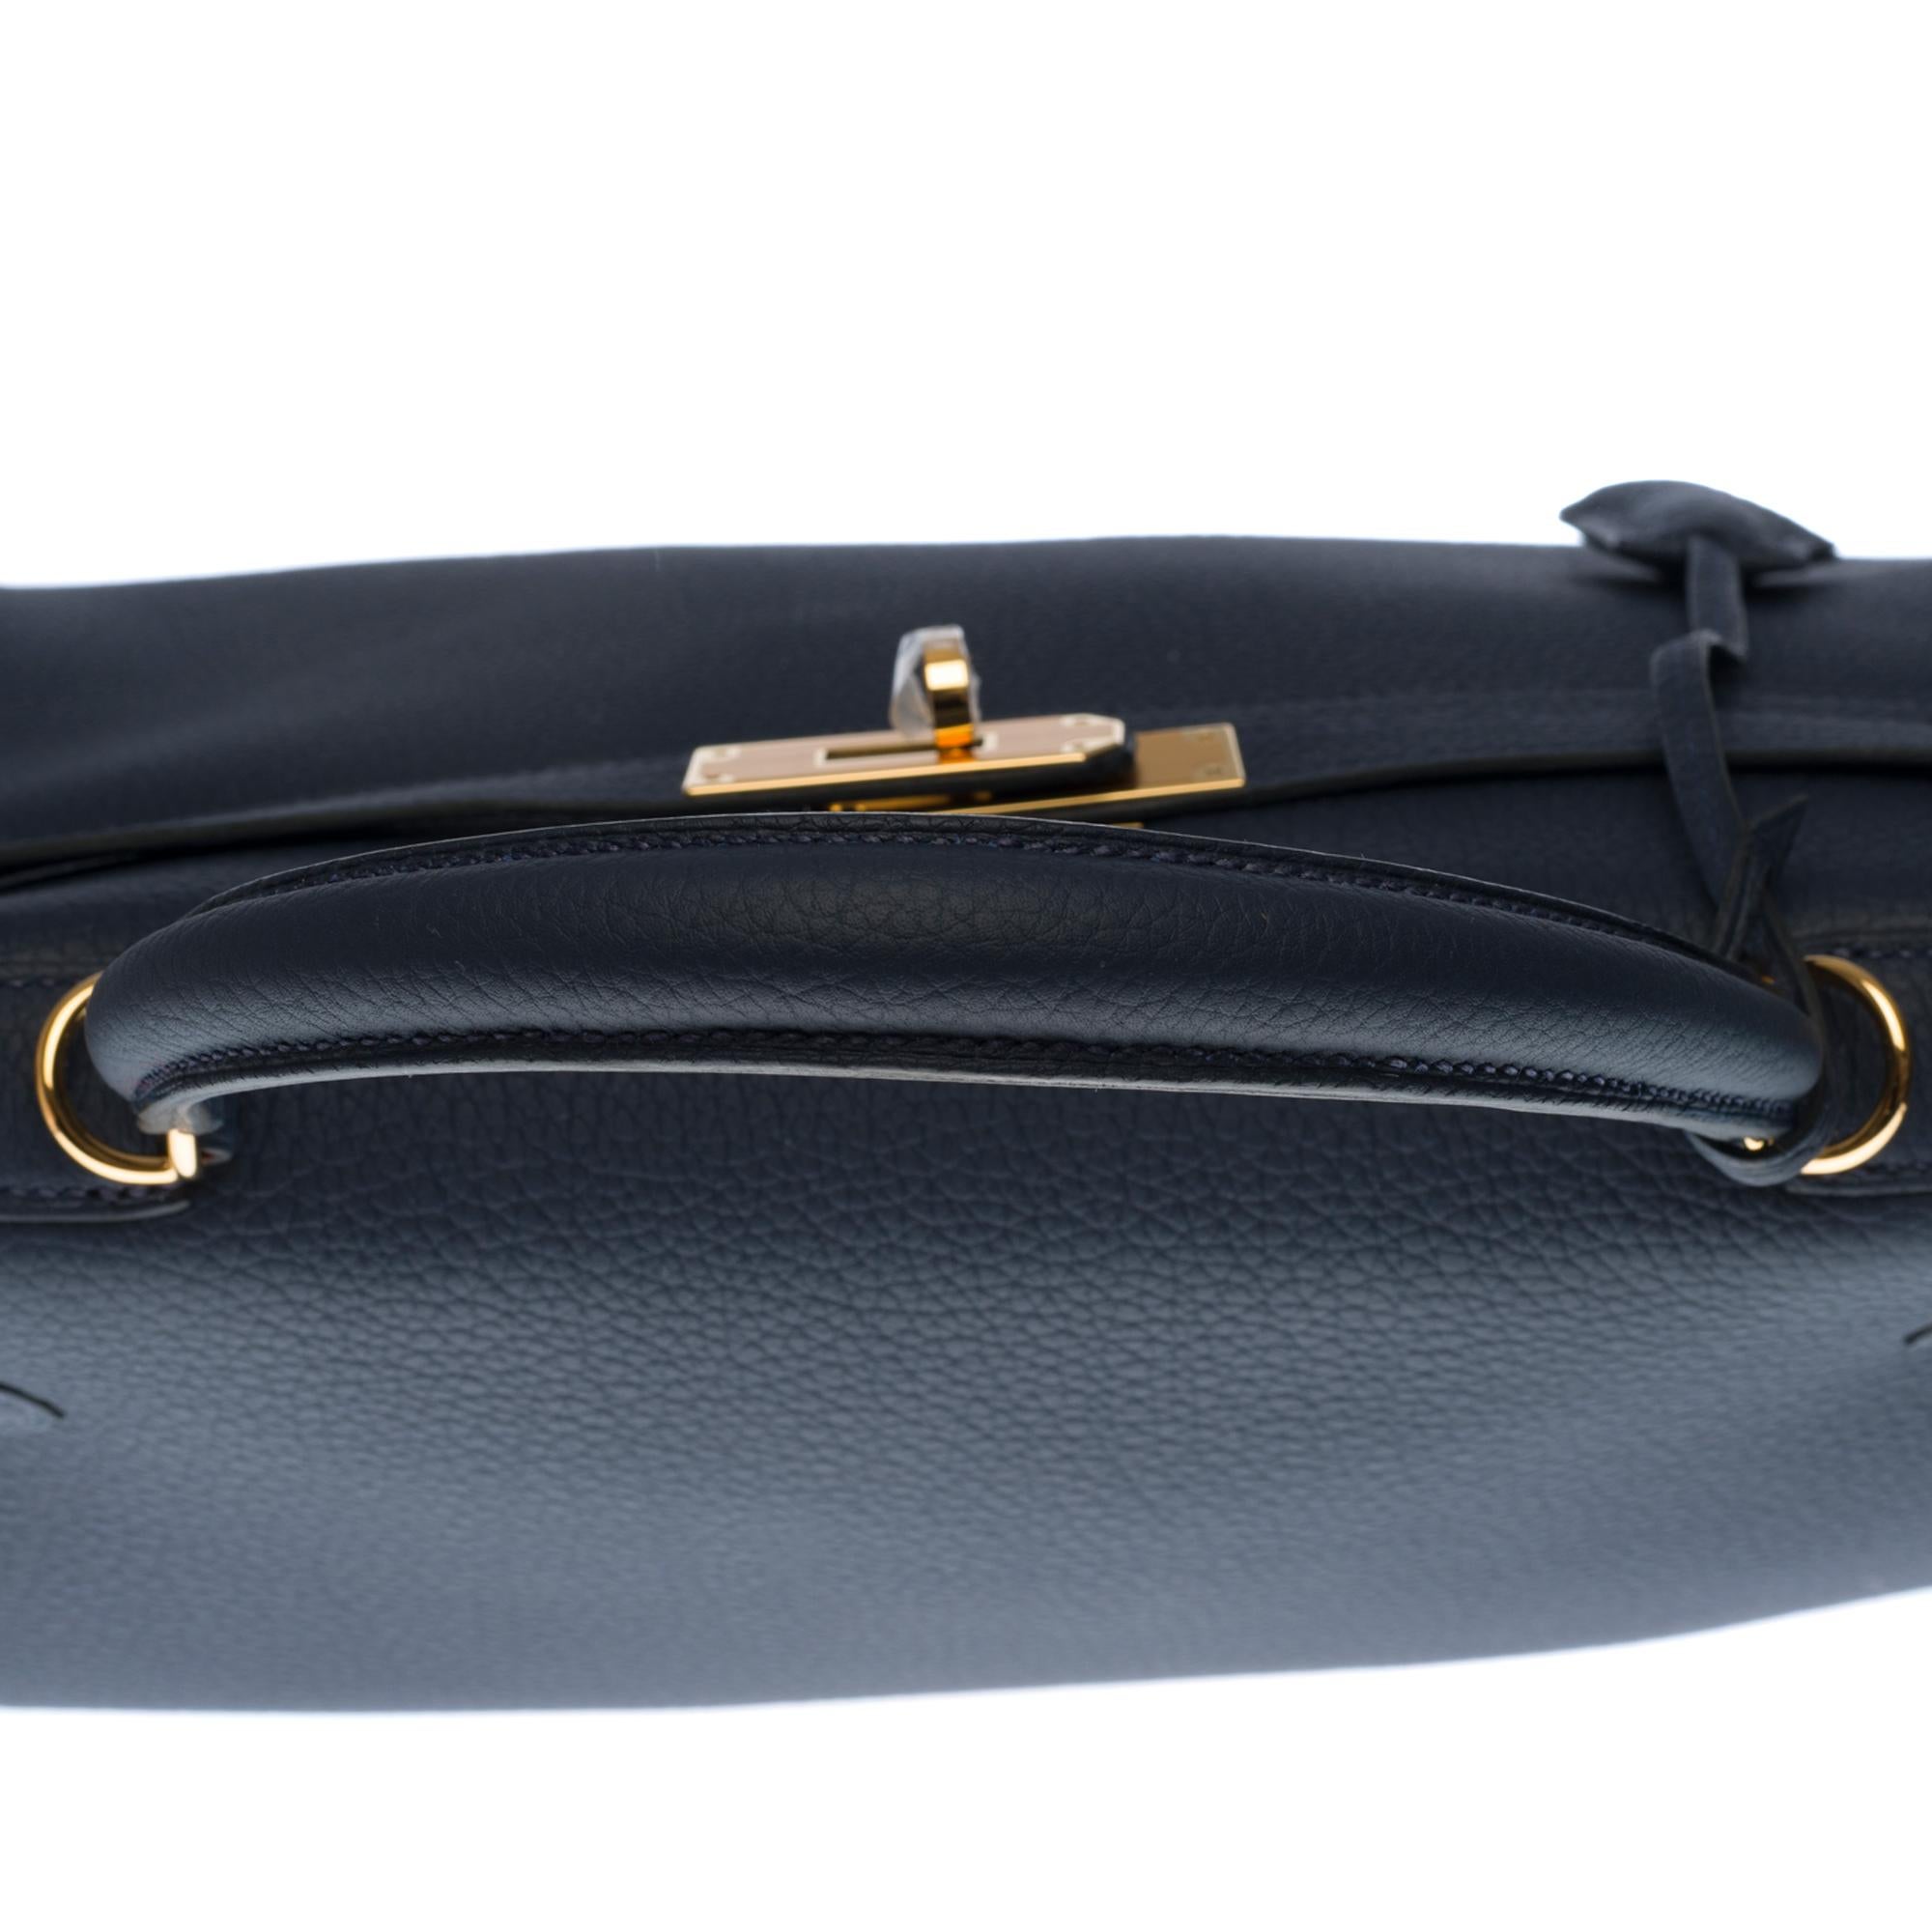 NEW- Hermès Kelly 32cm handbag with strap in bleu nuit togo leather, GHW 4